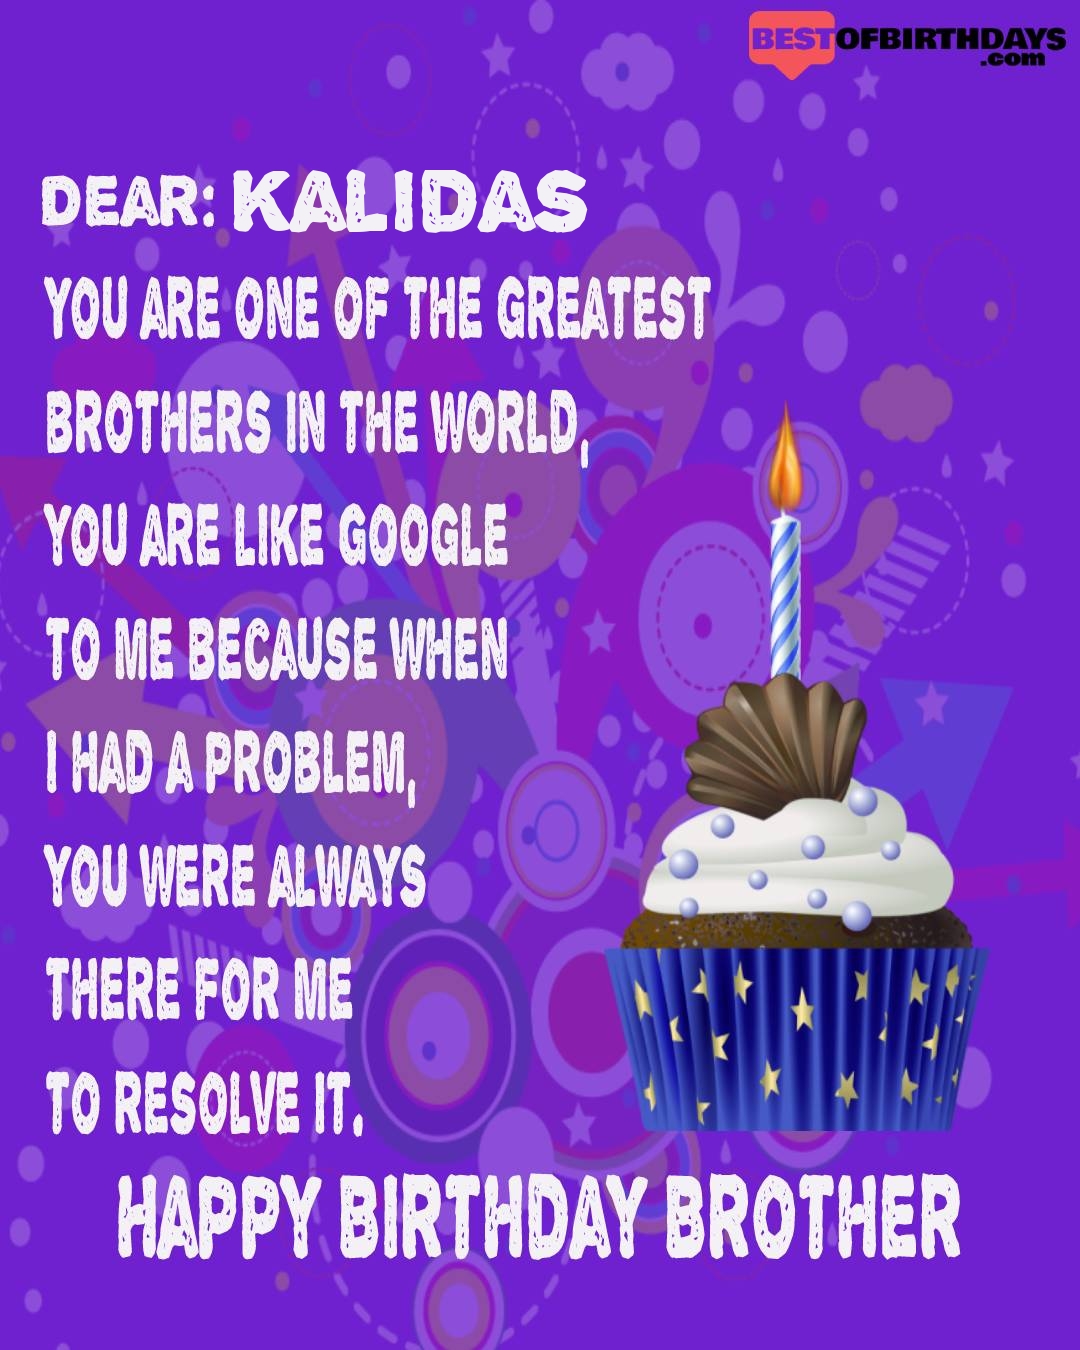 Happy birthday kalidas bhai brother bro